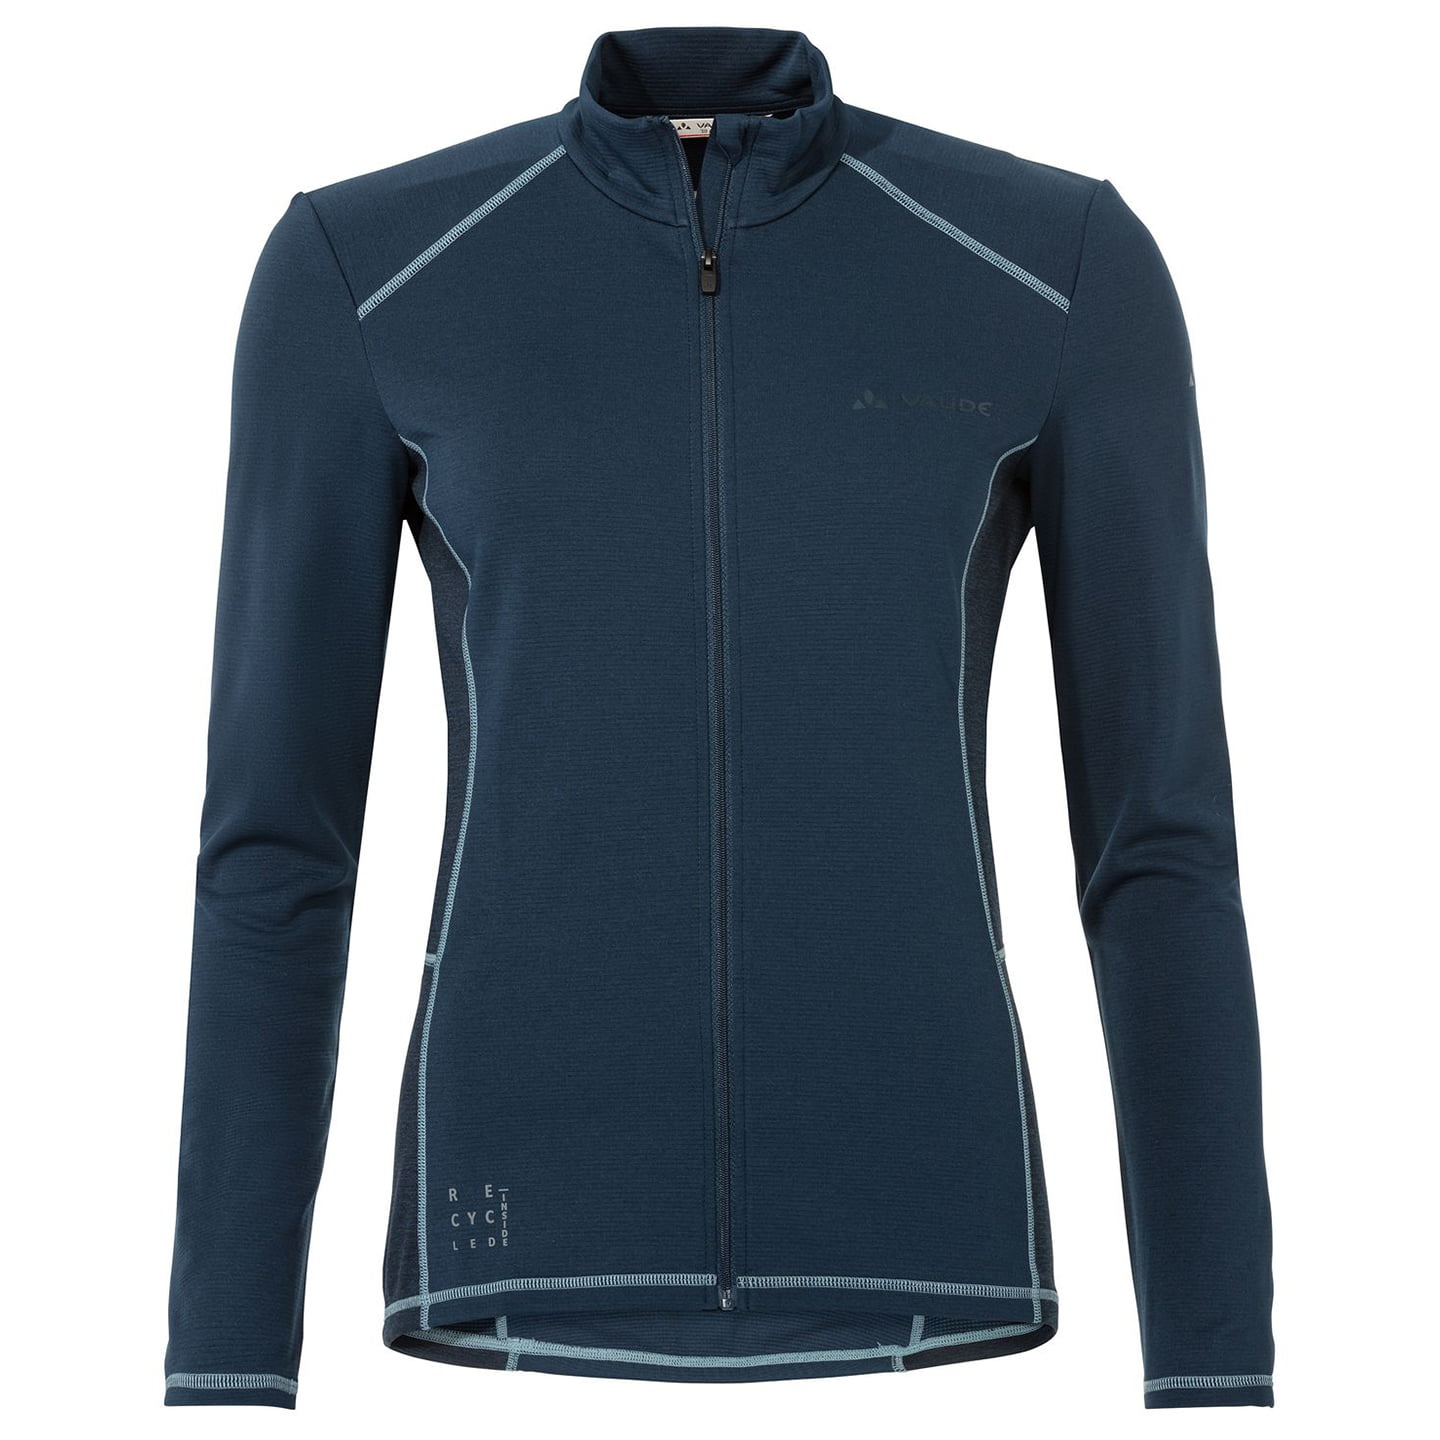 VAUDE Matera Women’s Long Sleeve Jersey, size 36, Bike Jersey, Cycling clothes